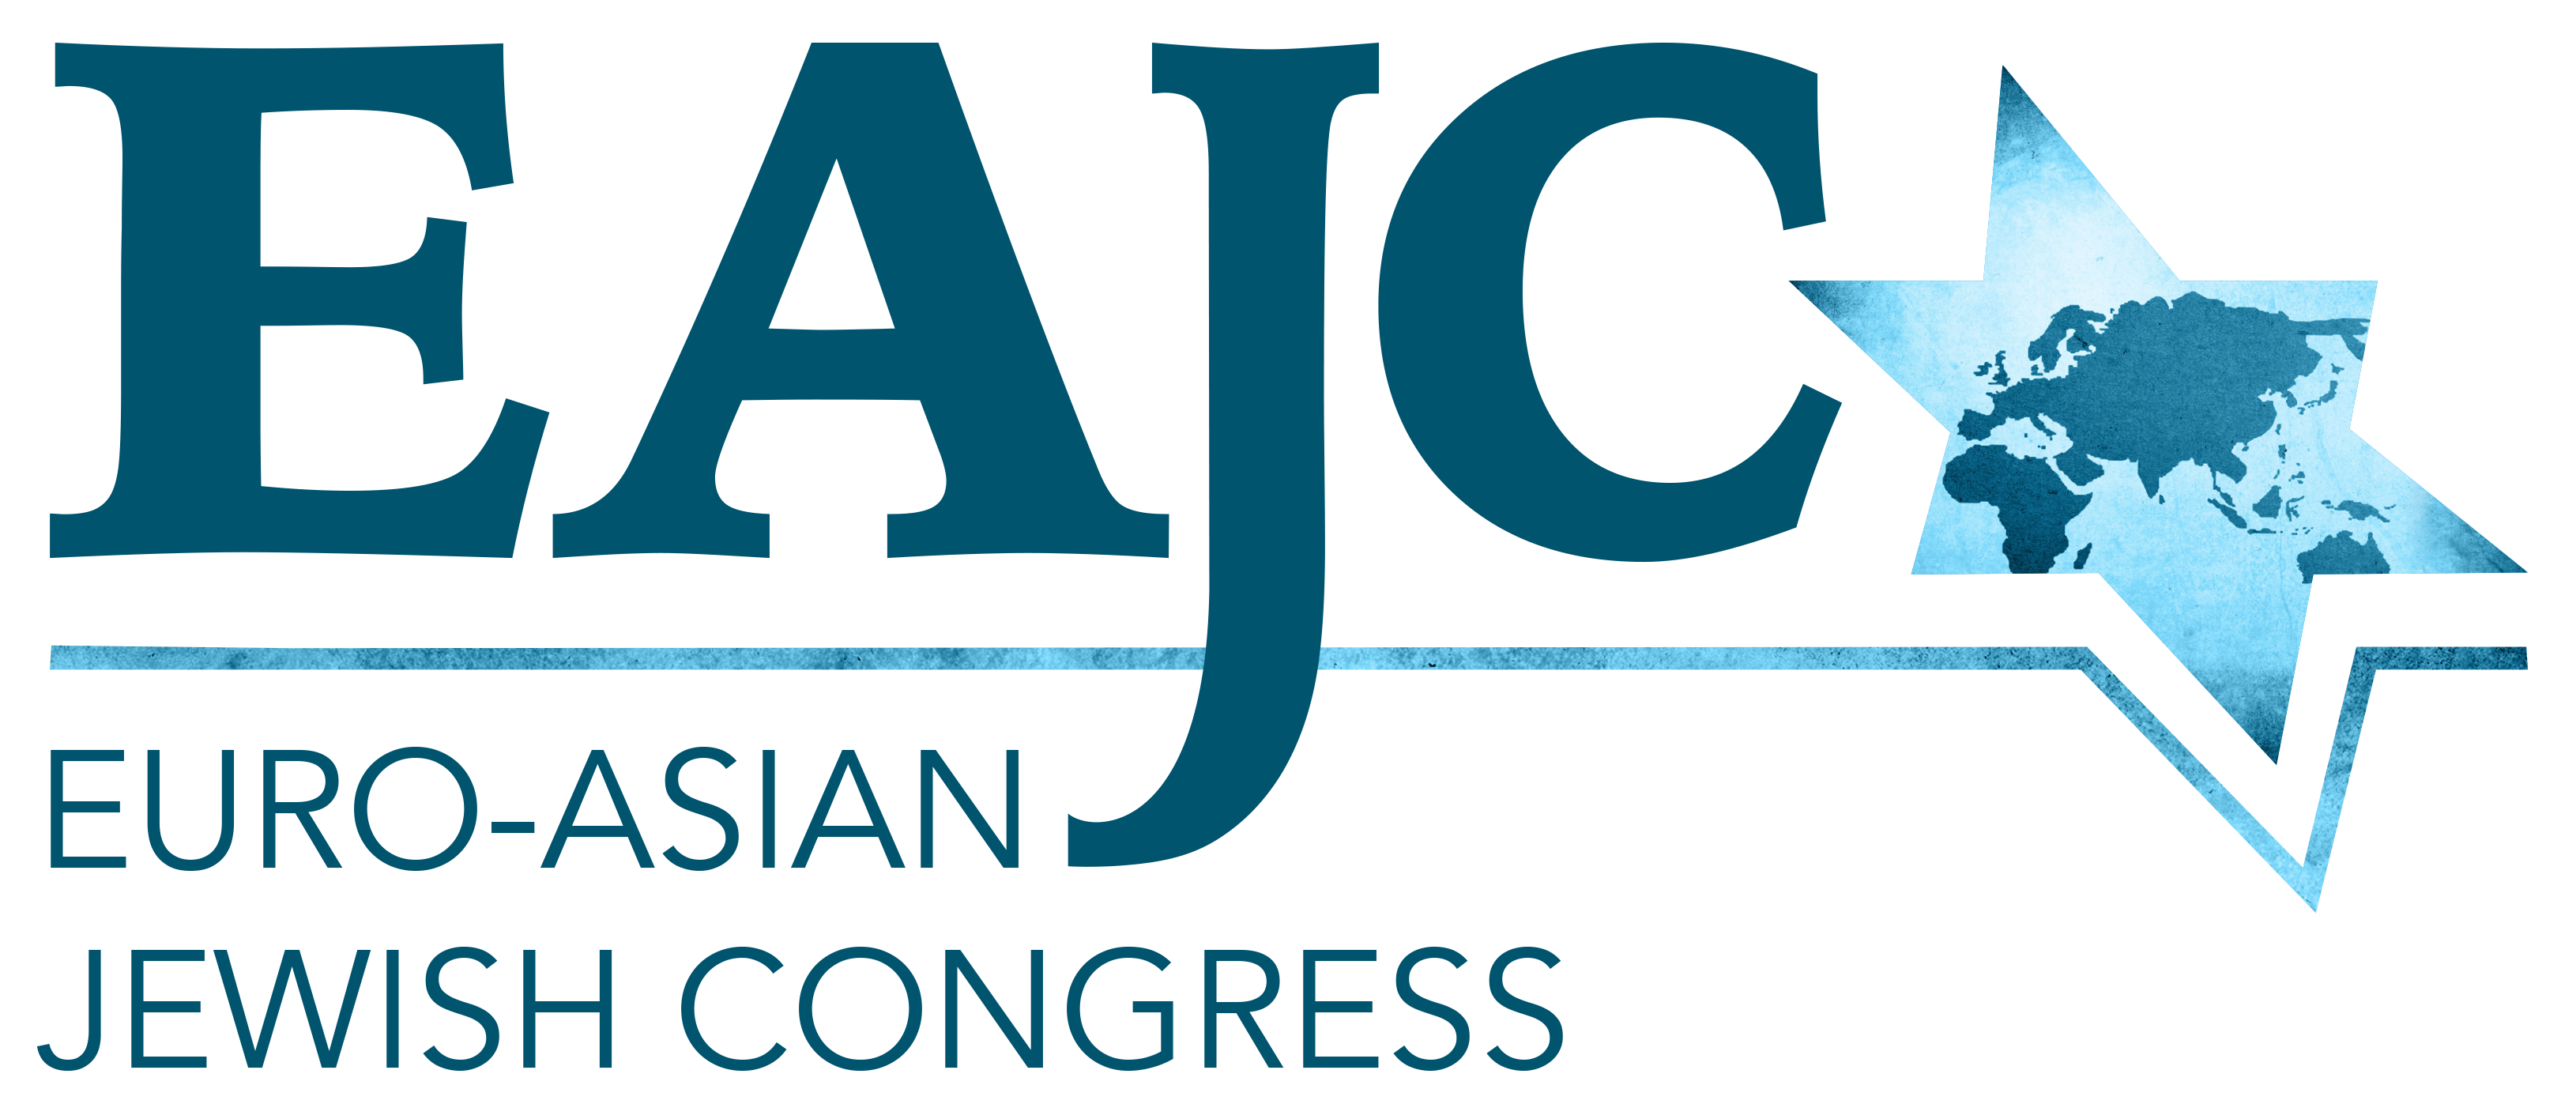 The Euro-Asian Jewish Congress